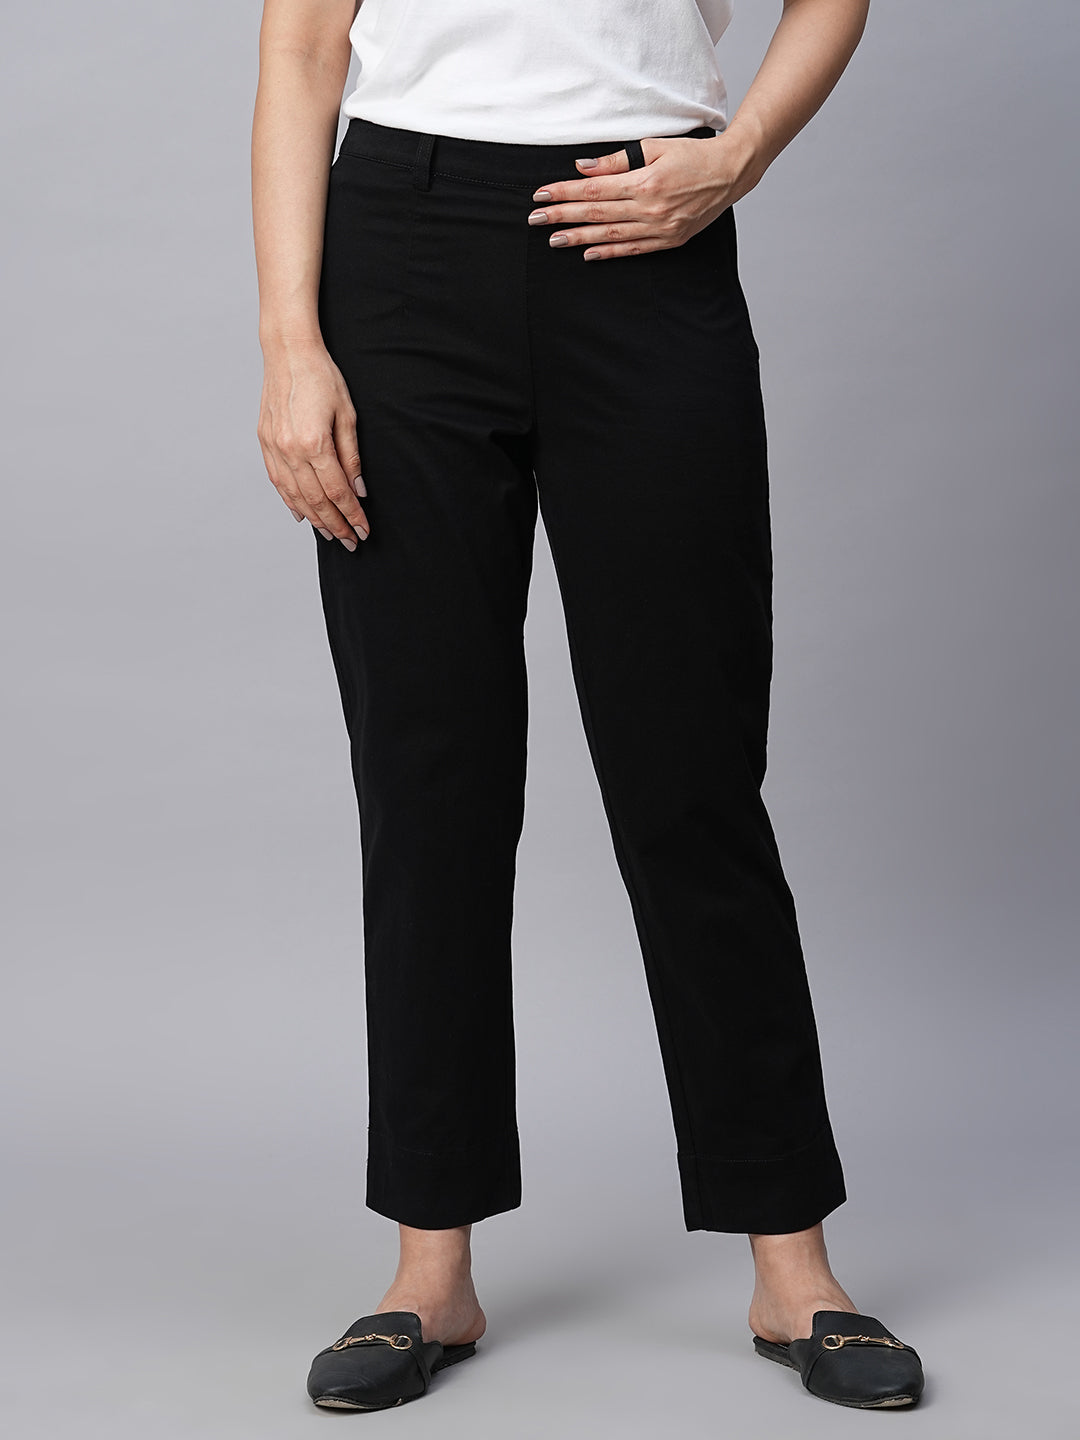 Women's Cotton Lycra Black Regular Fit Pant